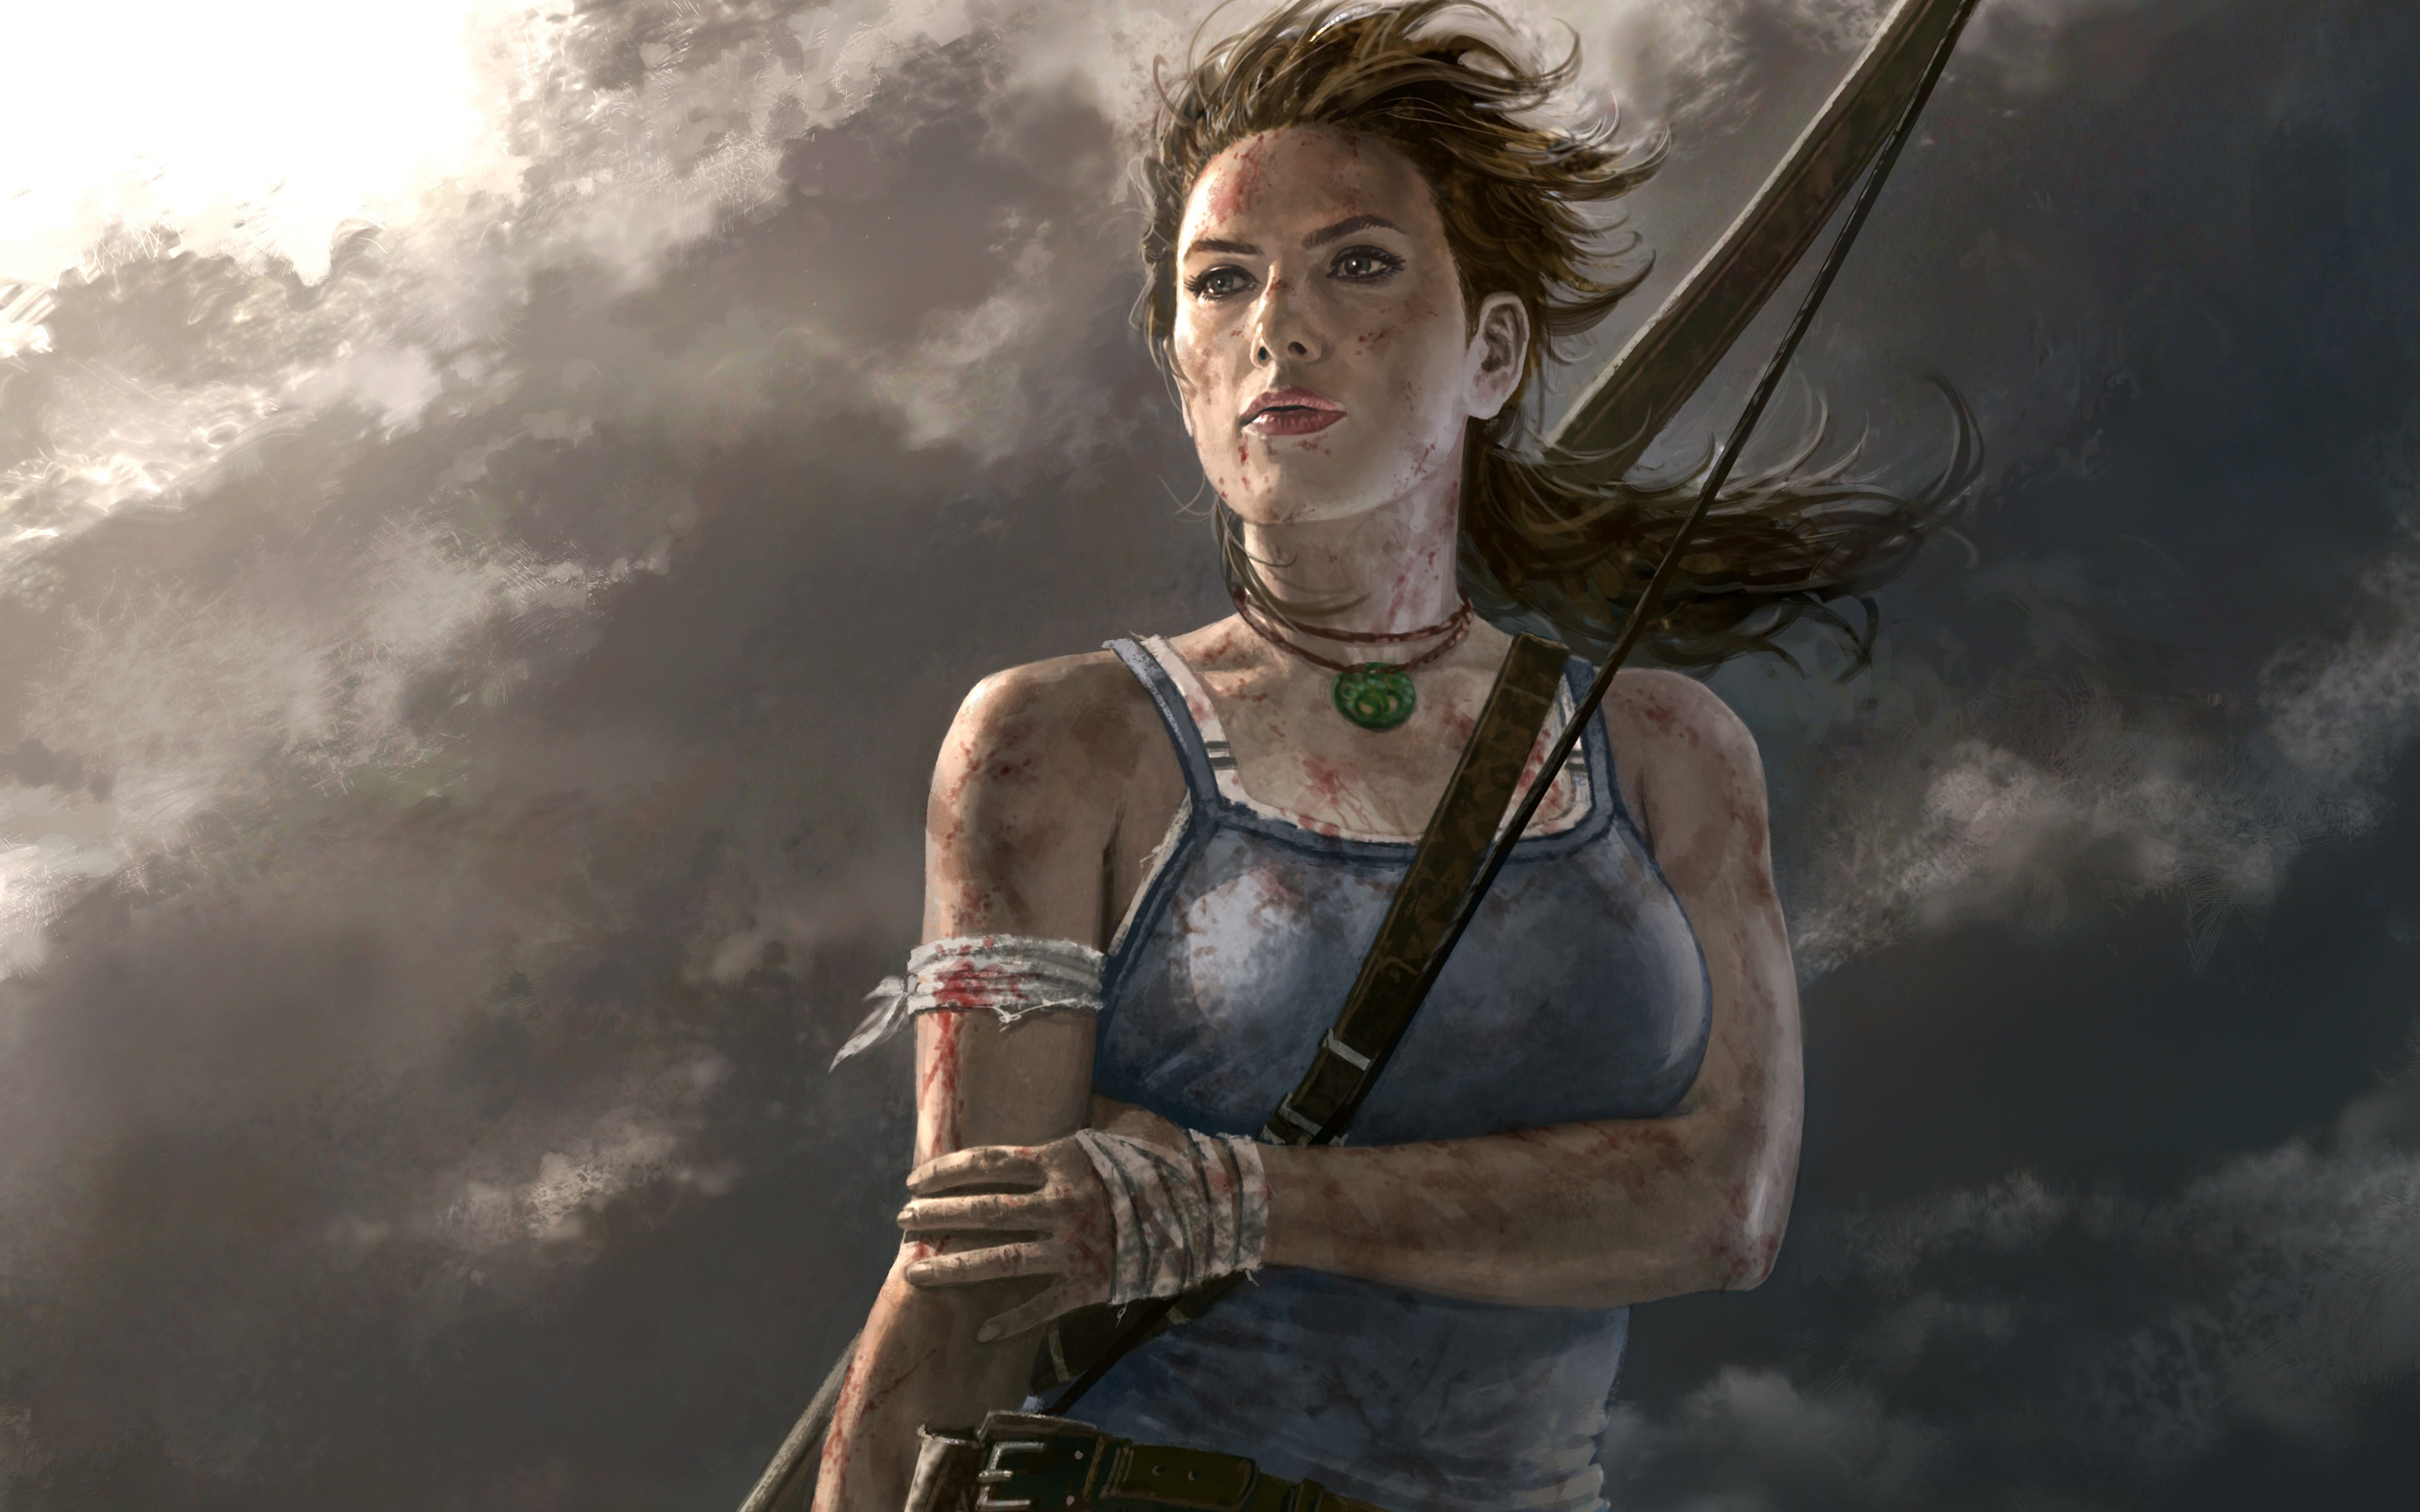 Description Lara Croft Wallpaper Background In